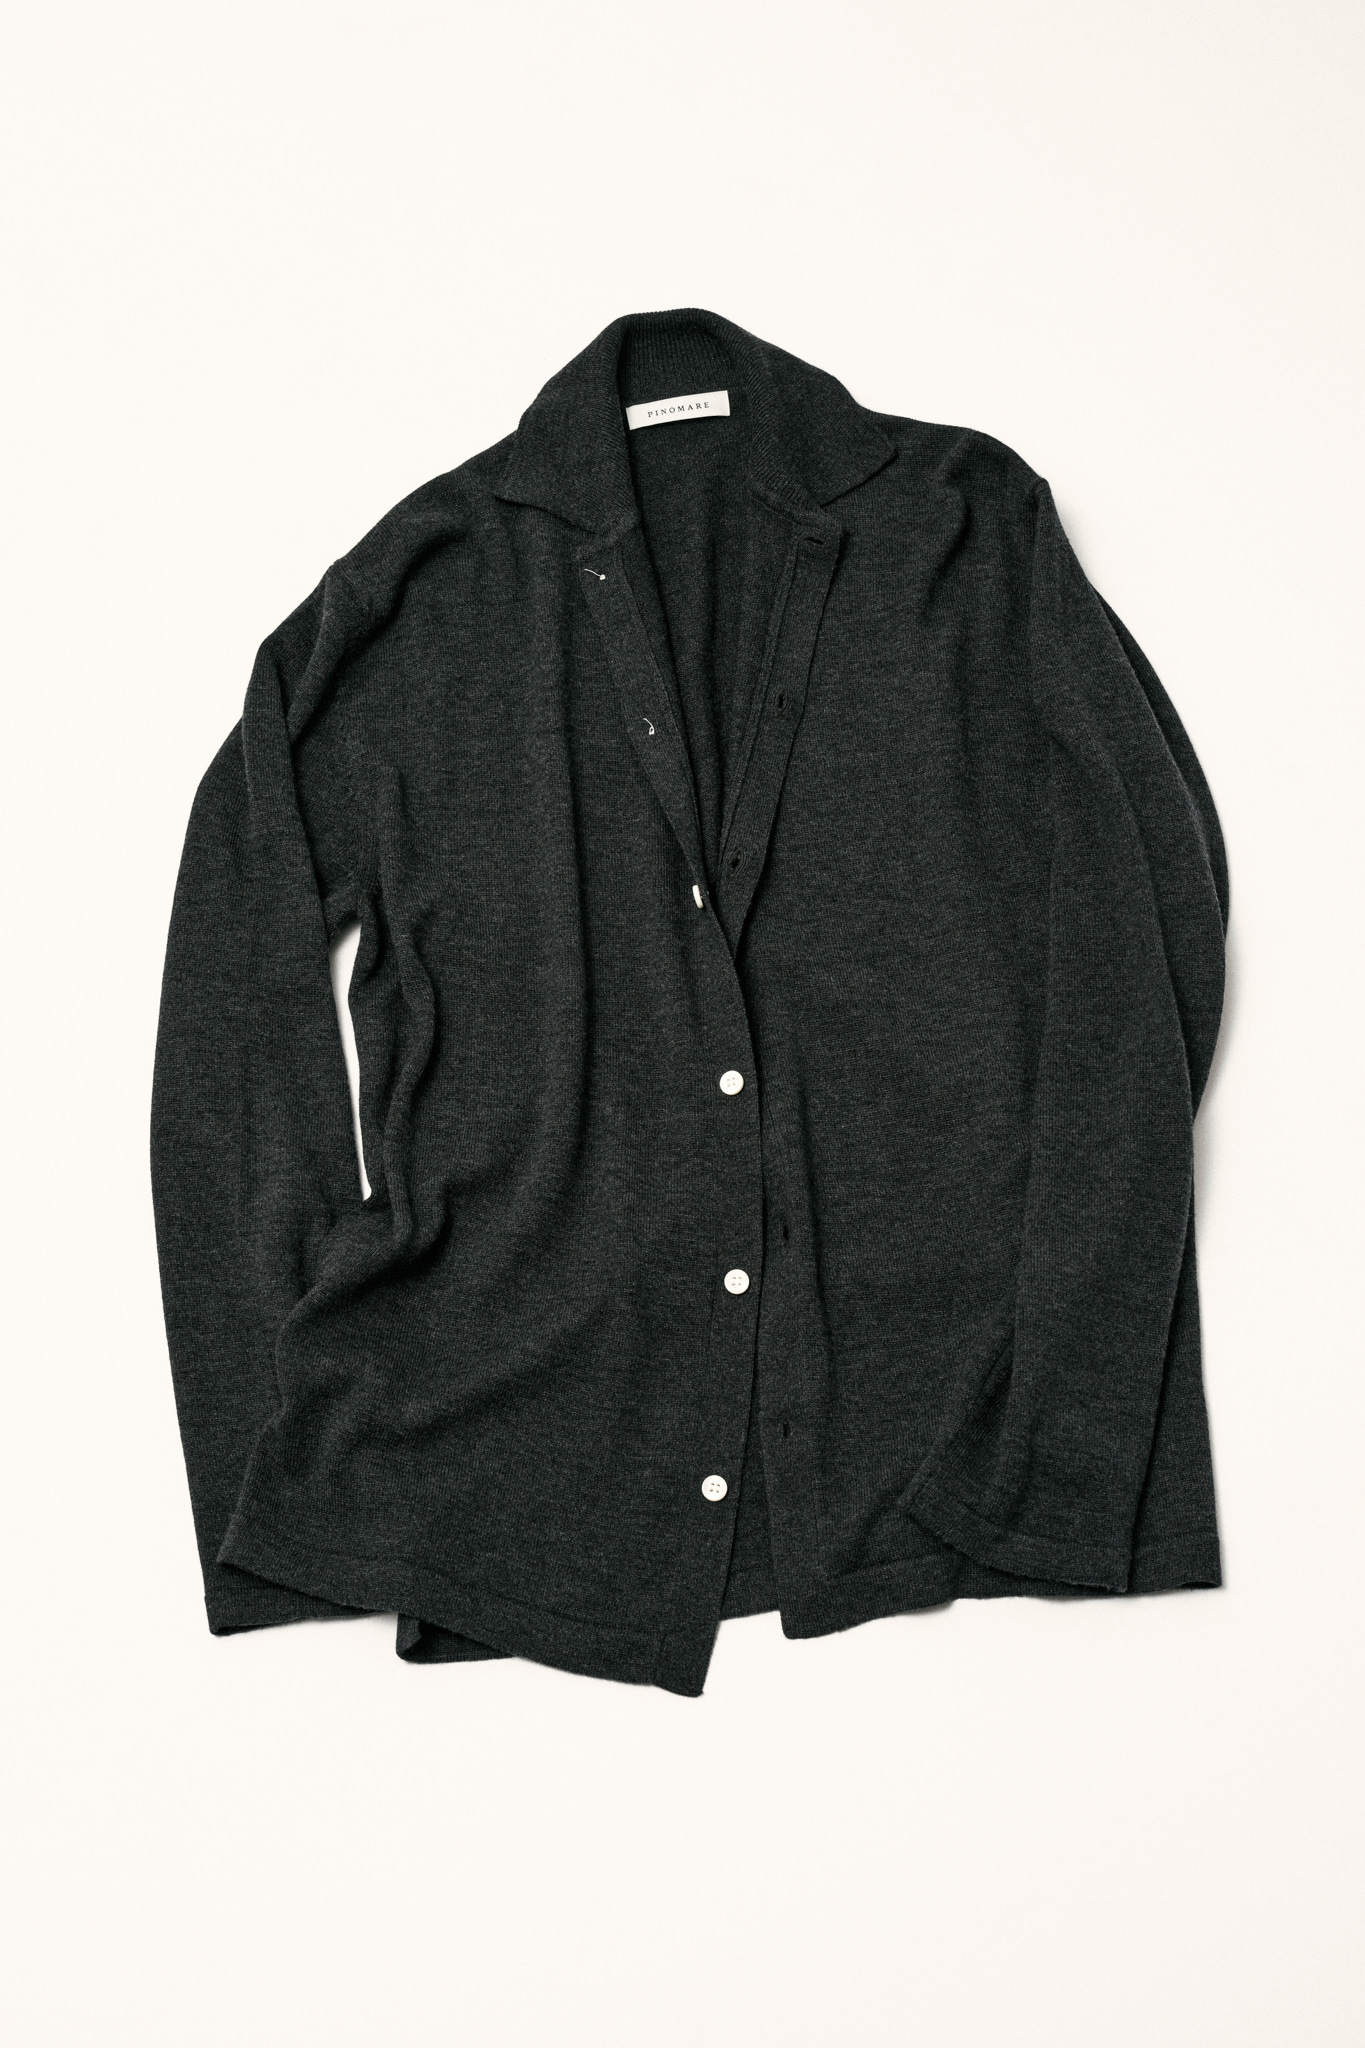 Luca knit shirt (charcoal gray)PINOMARE(피노마레)